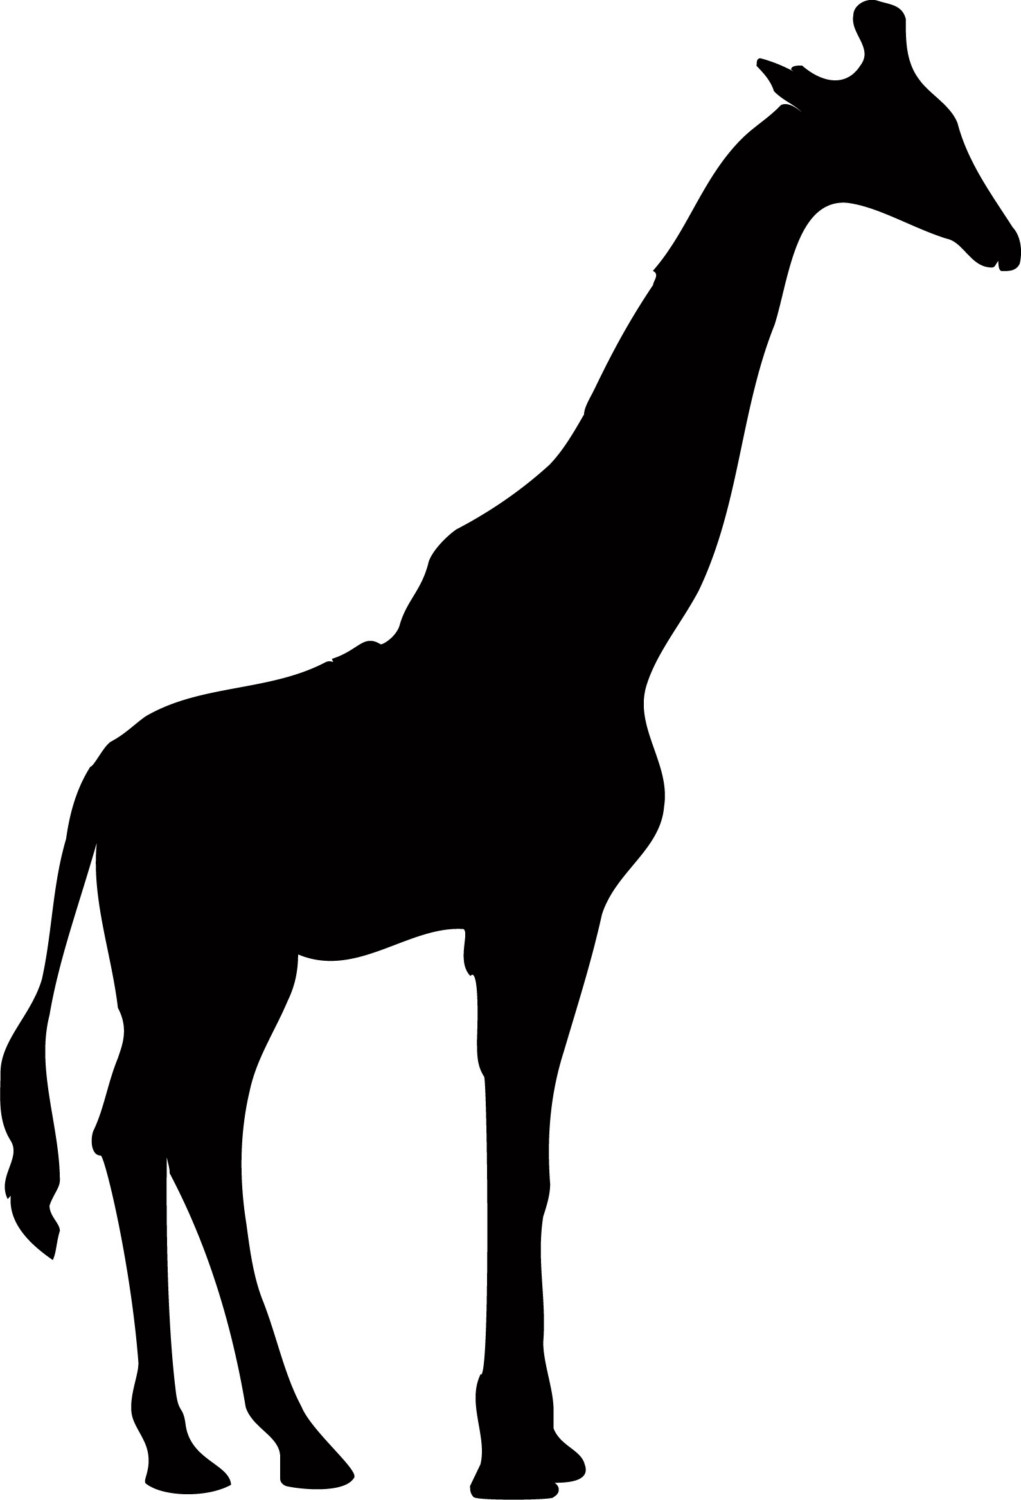 Giraffe silhouette clipart; G